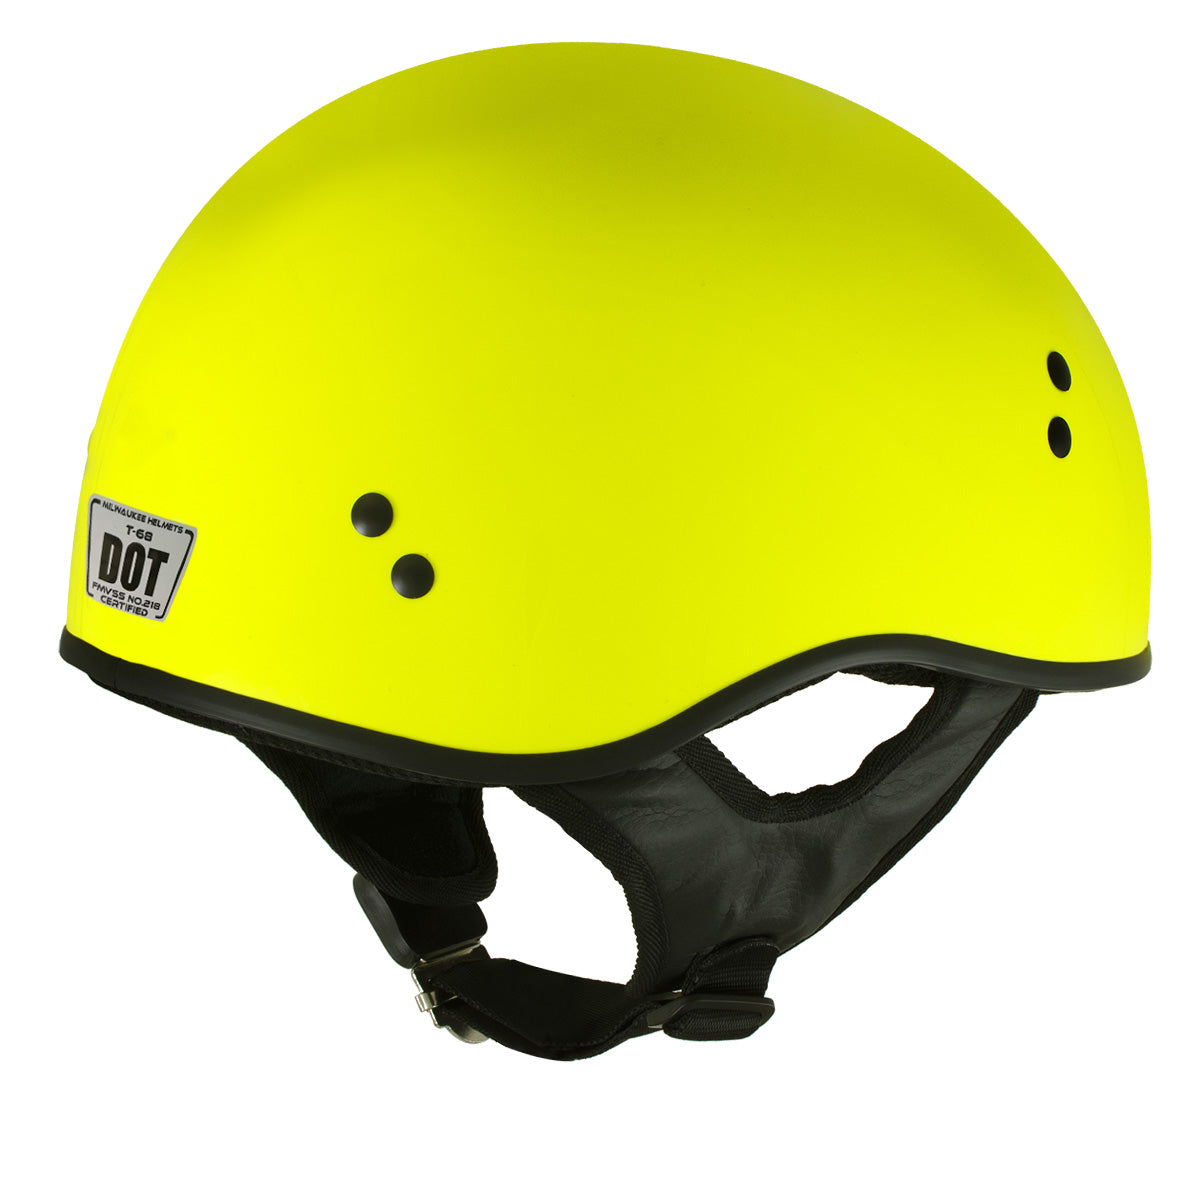 Milwaukee Helmets T68 'The O.G.' Hi-Vis Neon Yellow Motorcycle DOT Approved Skull Cap Half Helmet for Men and Women Biker